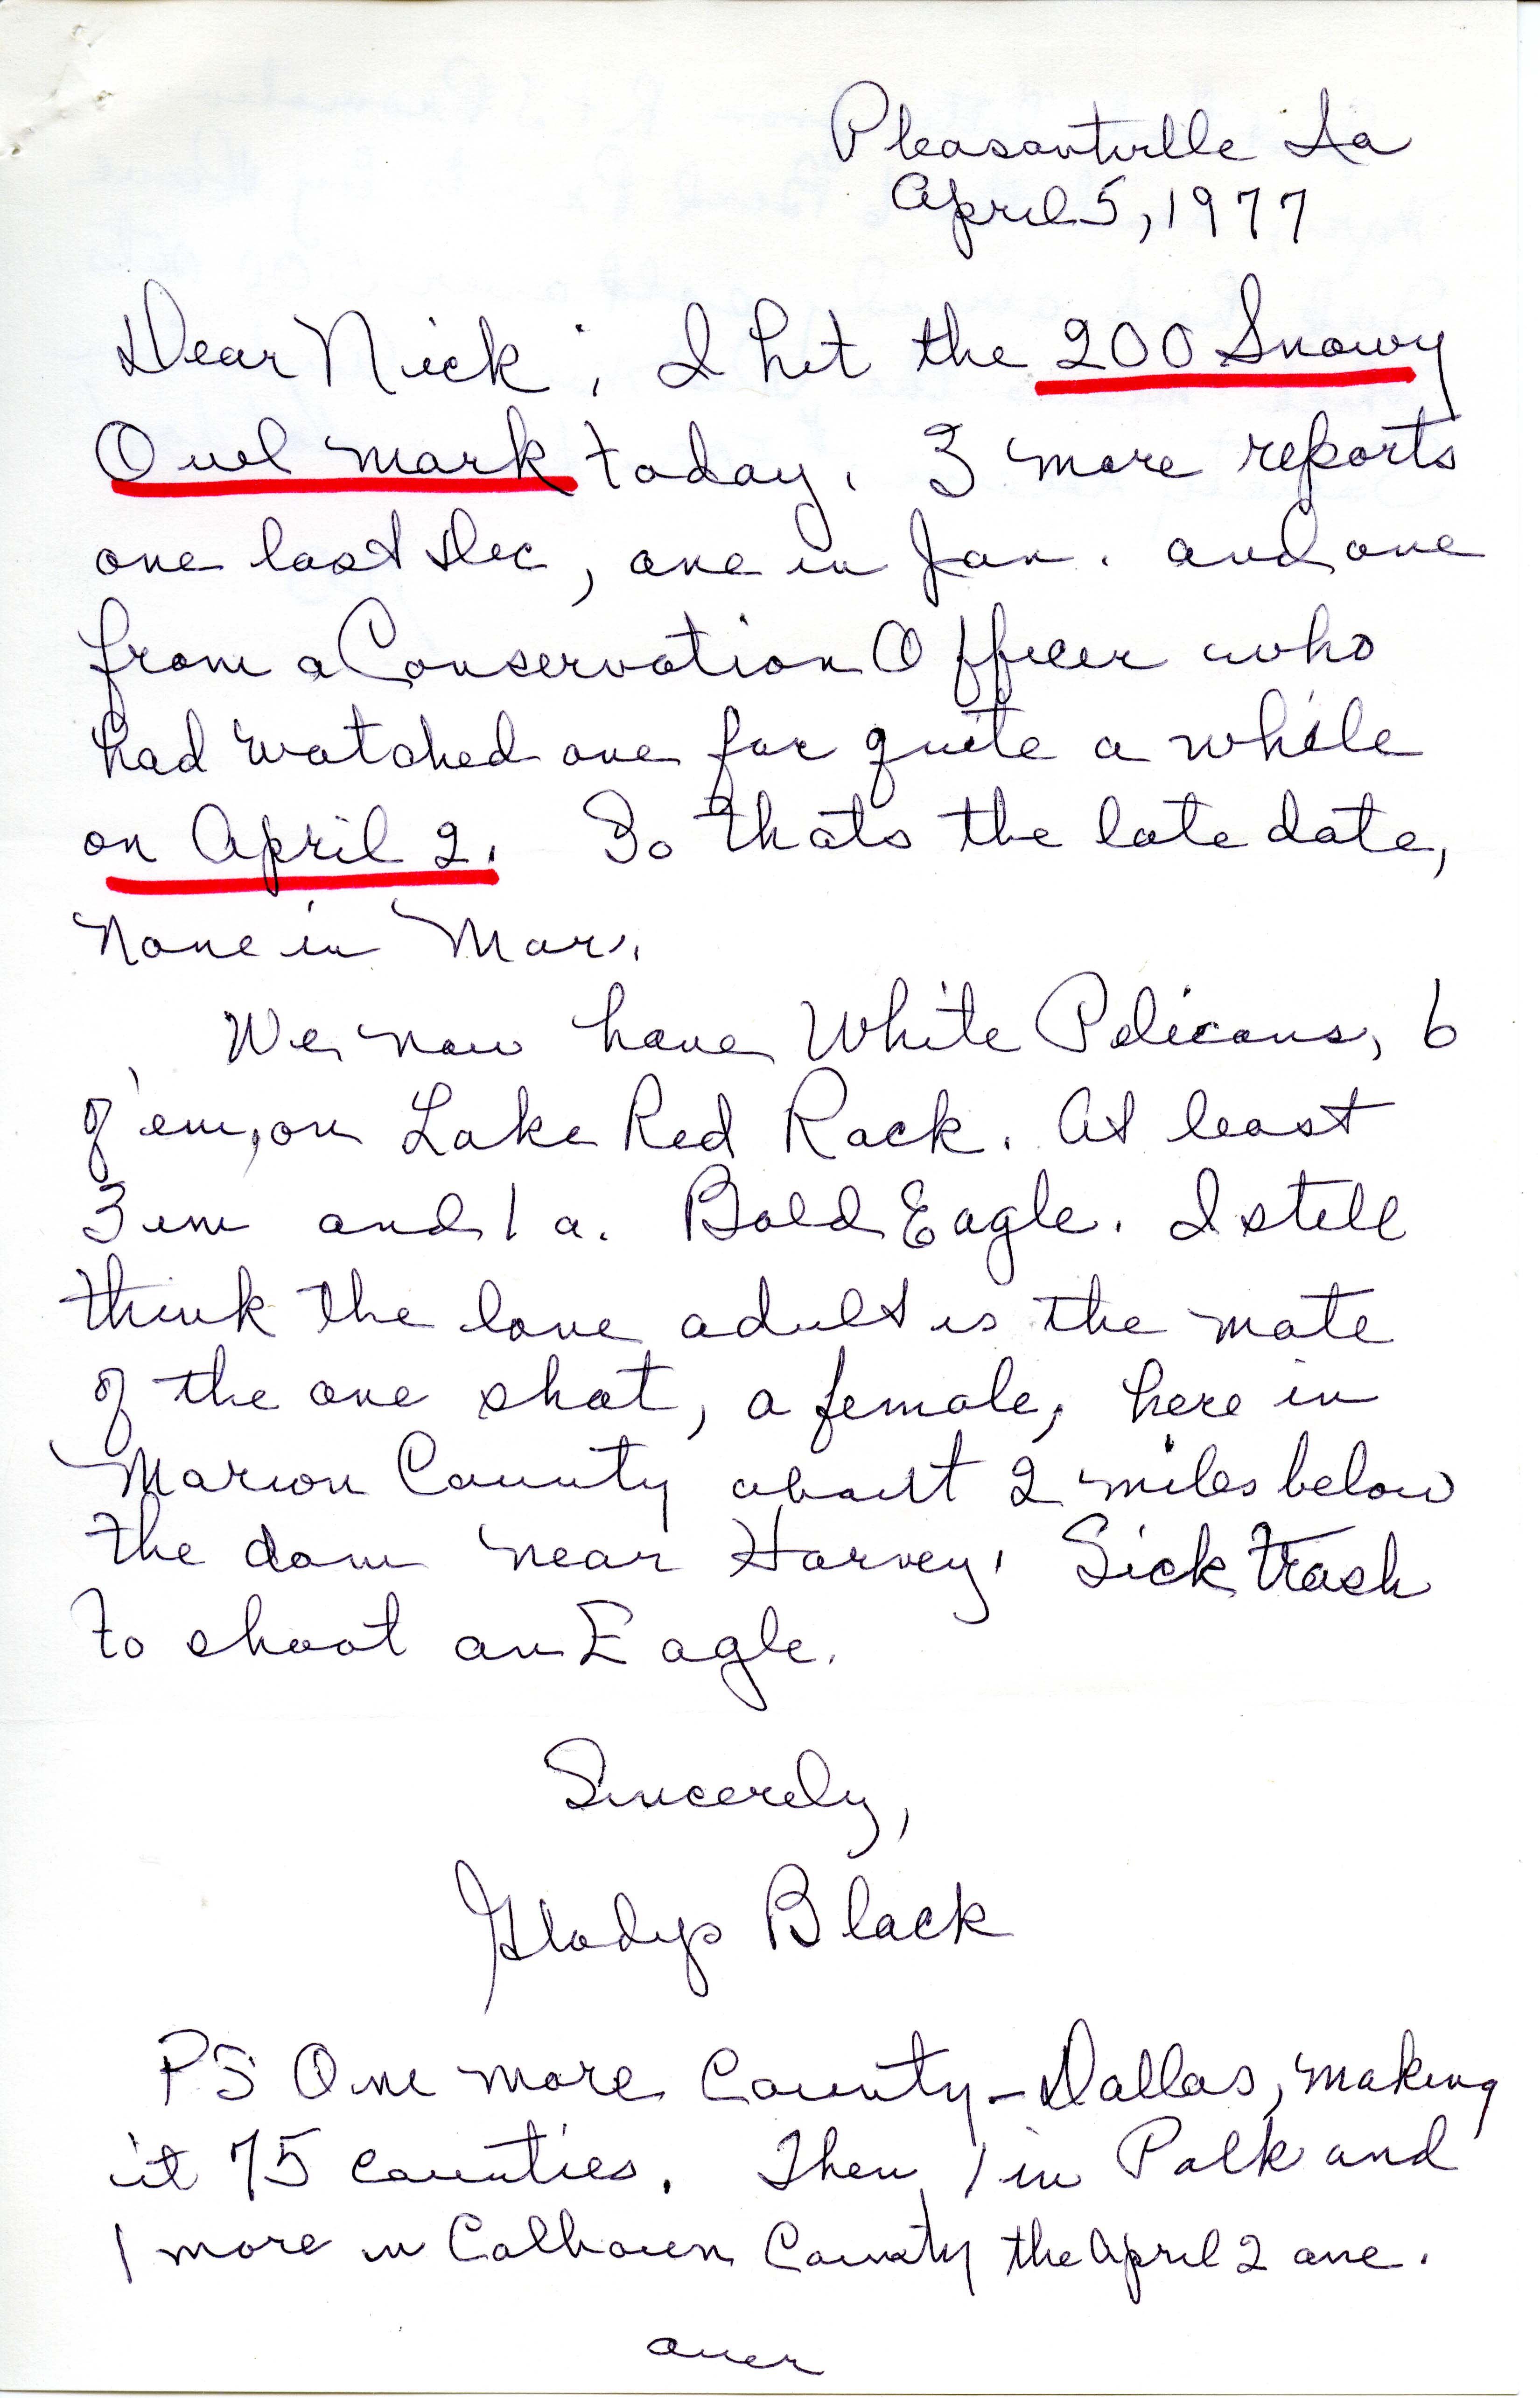 Gladys Black letter to Nicholas S. Halmi regarding bird sightings, April 5, 1977